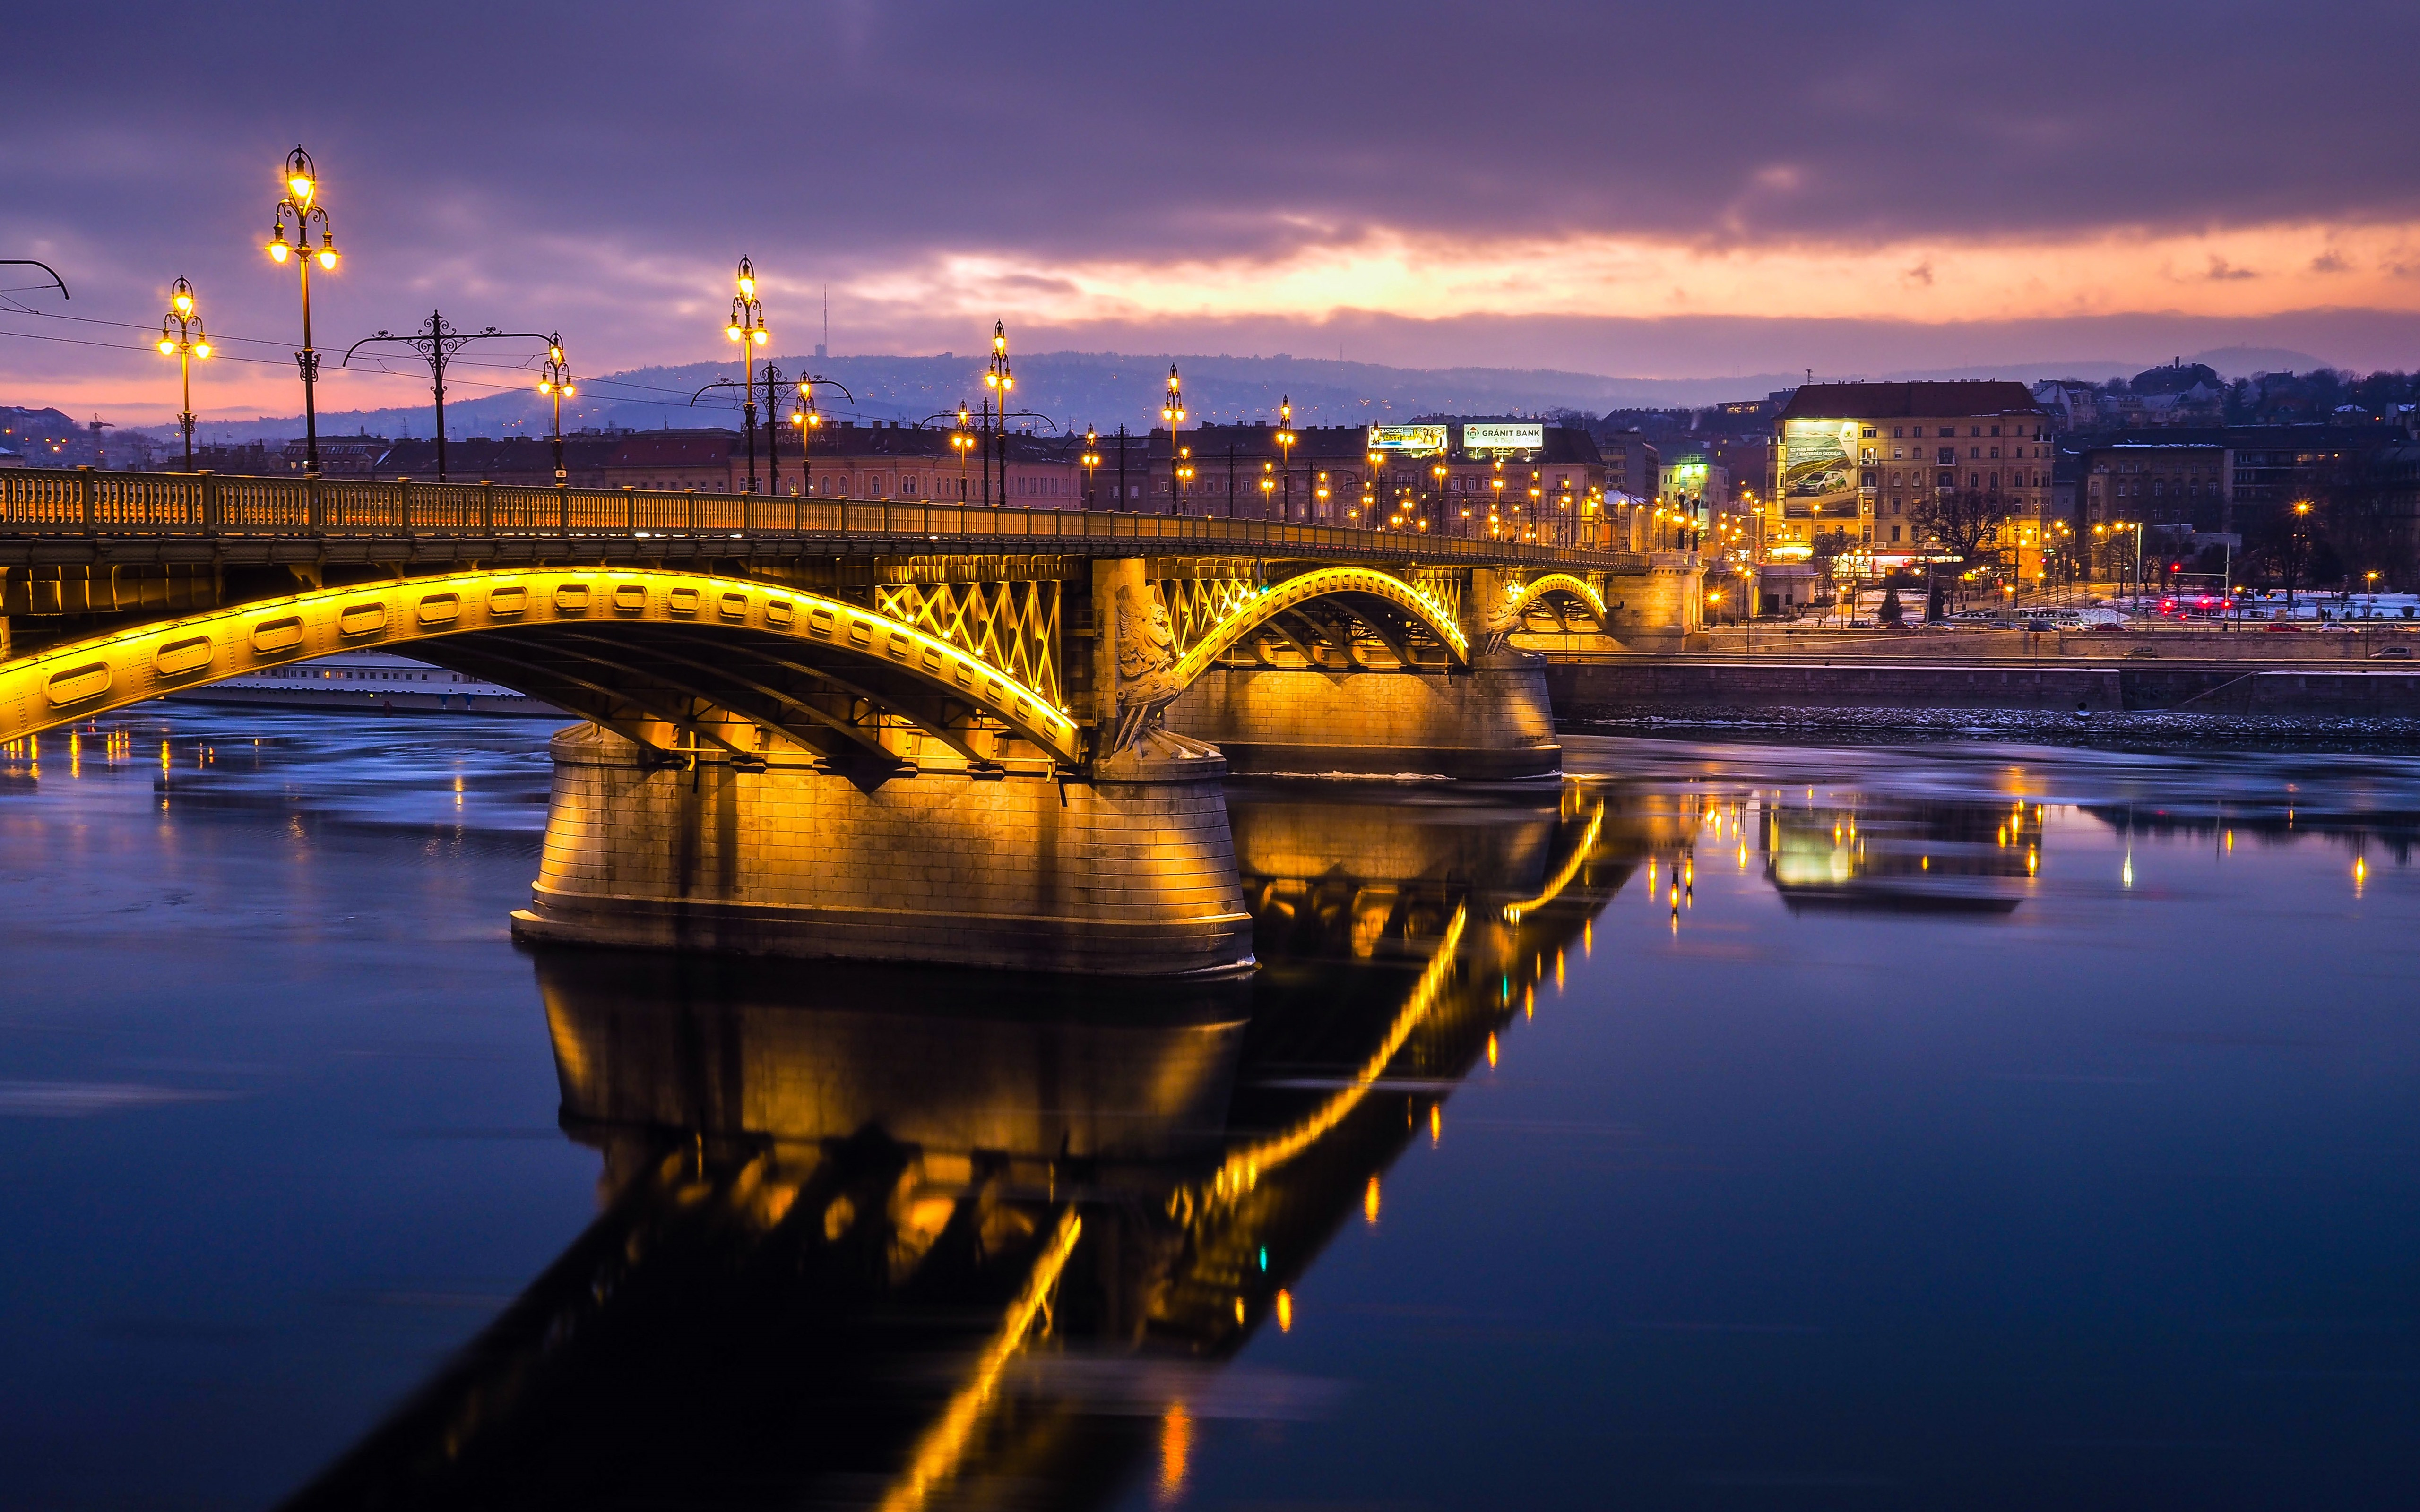 Night Bridge in Europe